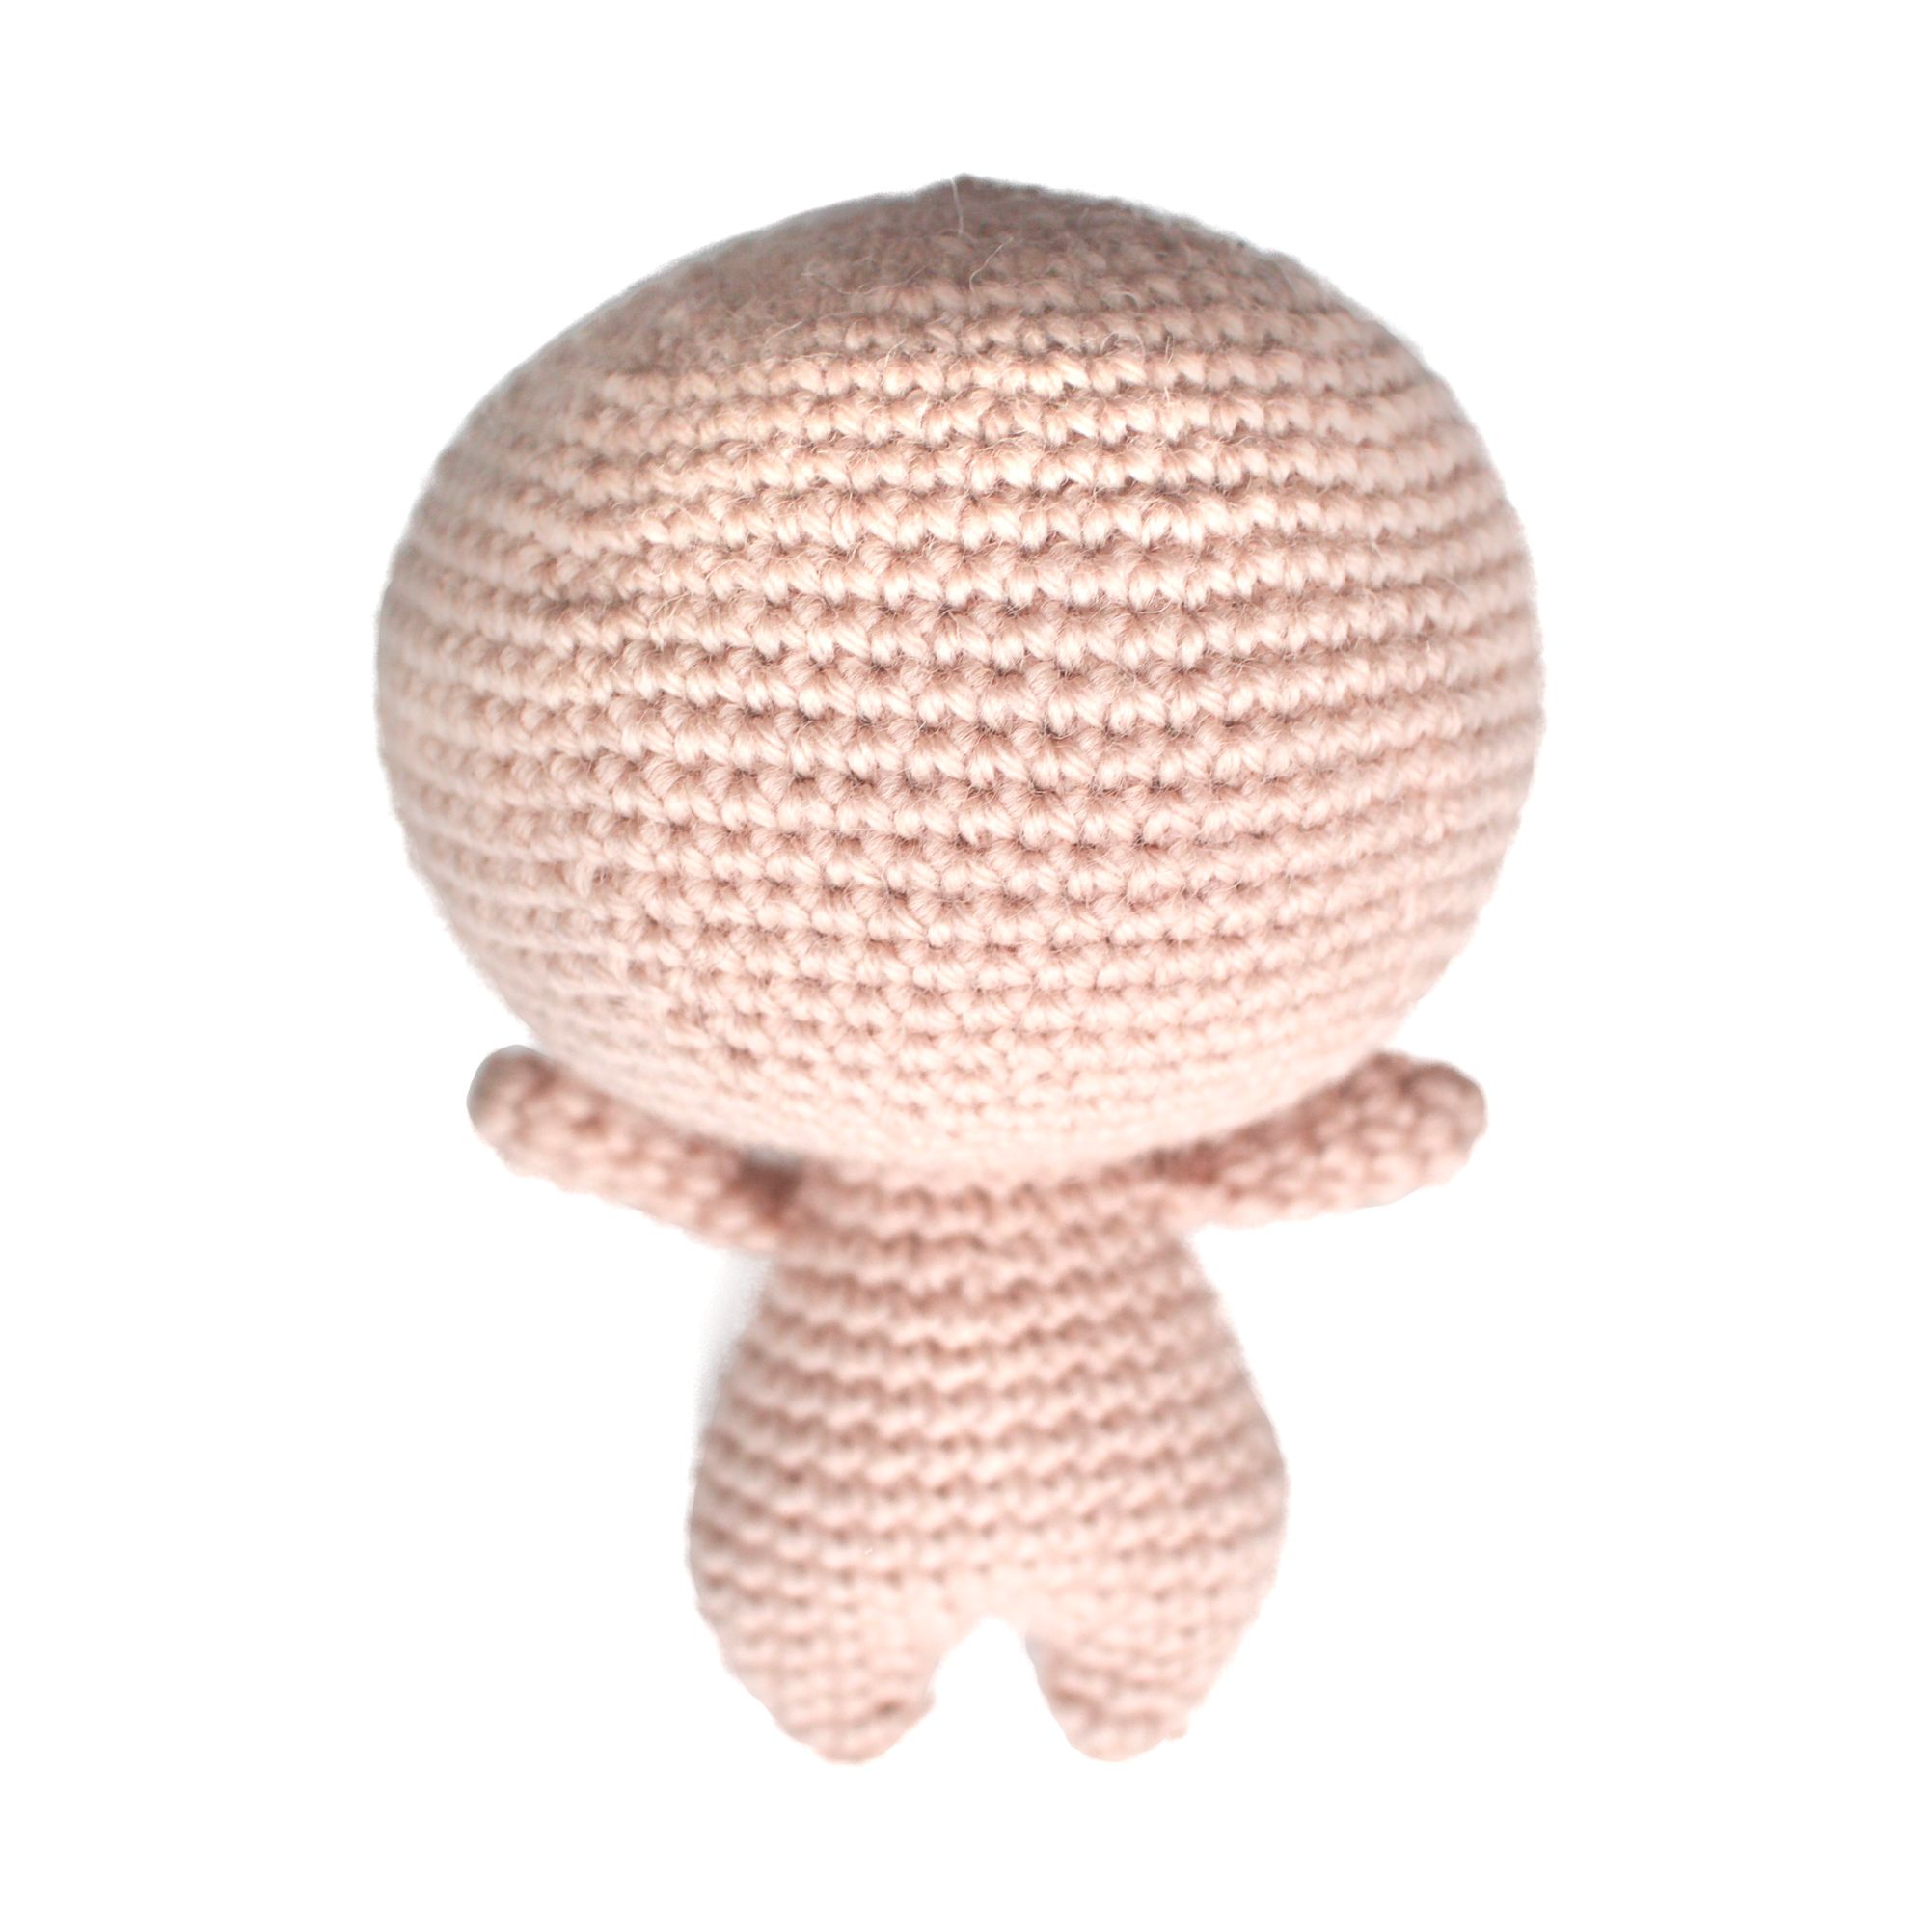 Amigurumi doll free crochet pattern